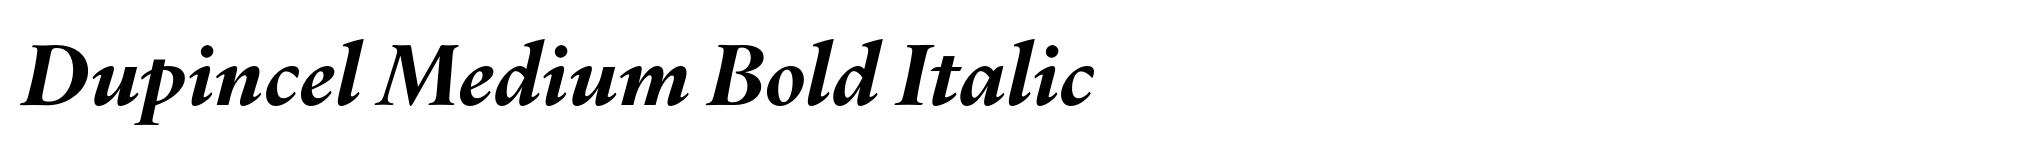 Dupincel Medium Bold Italic image